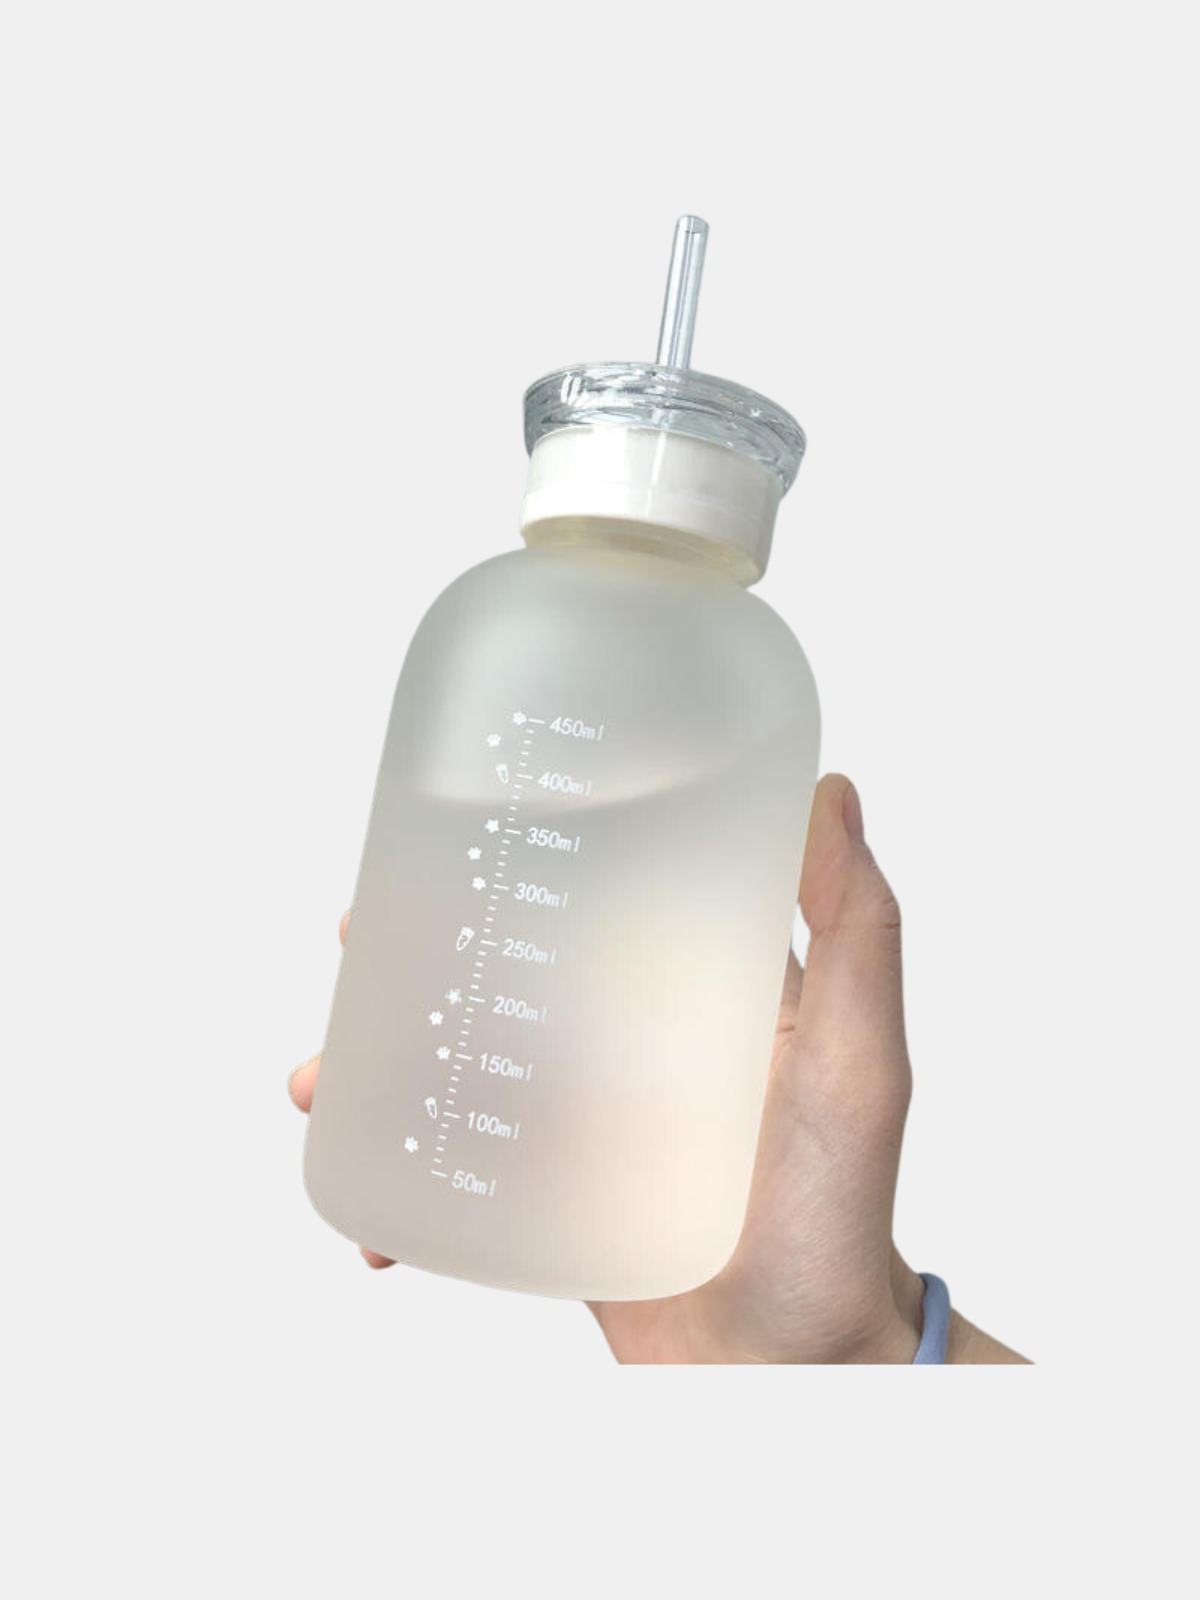 https://images.verishop.com/vigor-double-cover-straw-glass-milk-juice-cute-water-bottle-with-scale-lids-little-daisy-matte-portable-transparent-water-cup-glass-bottles-creative-handy/M00749565875905-3460645373?auto=format&cs=strip&fit=max&w=1200